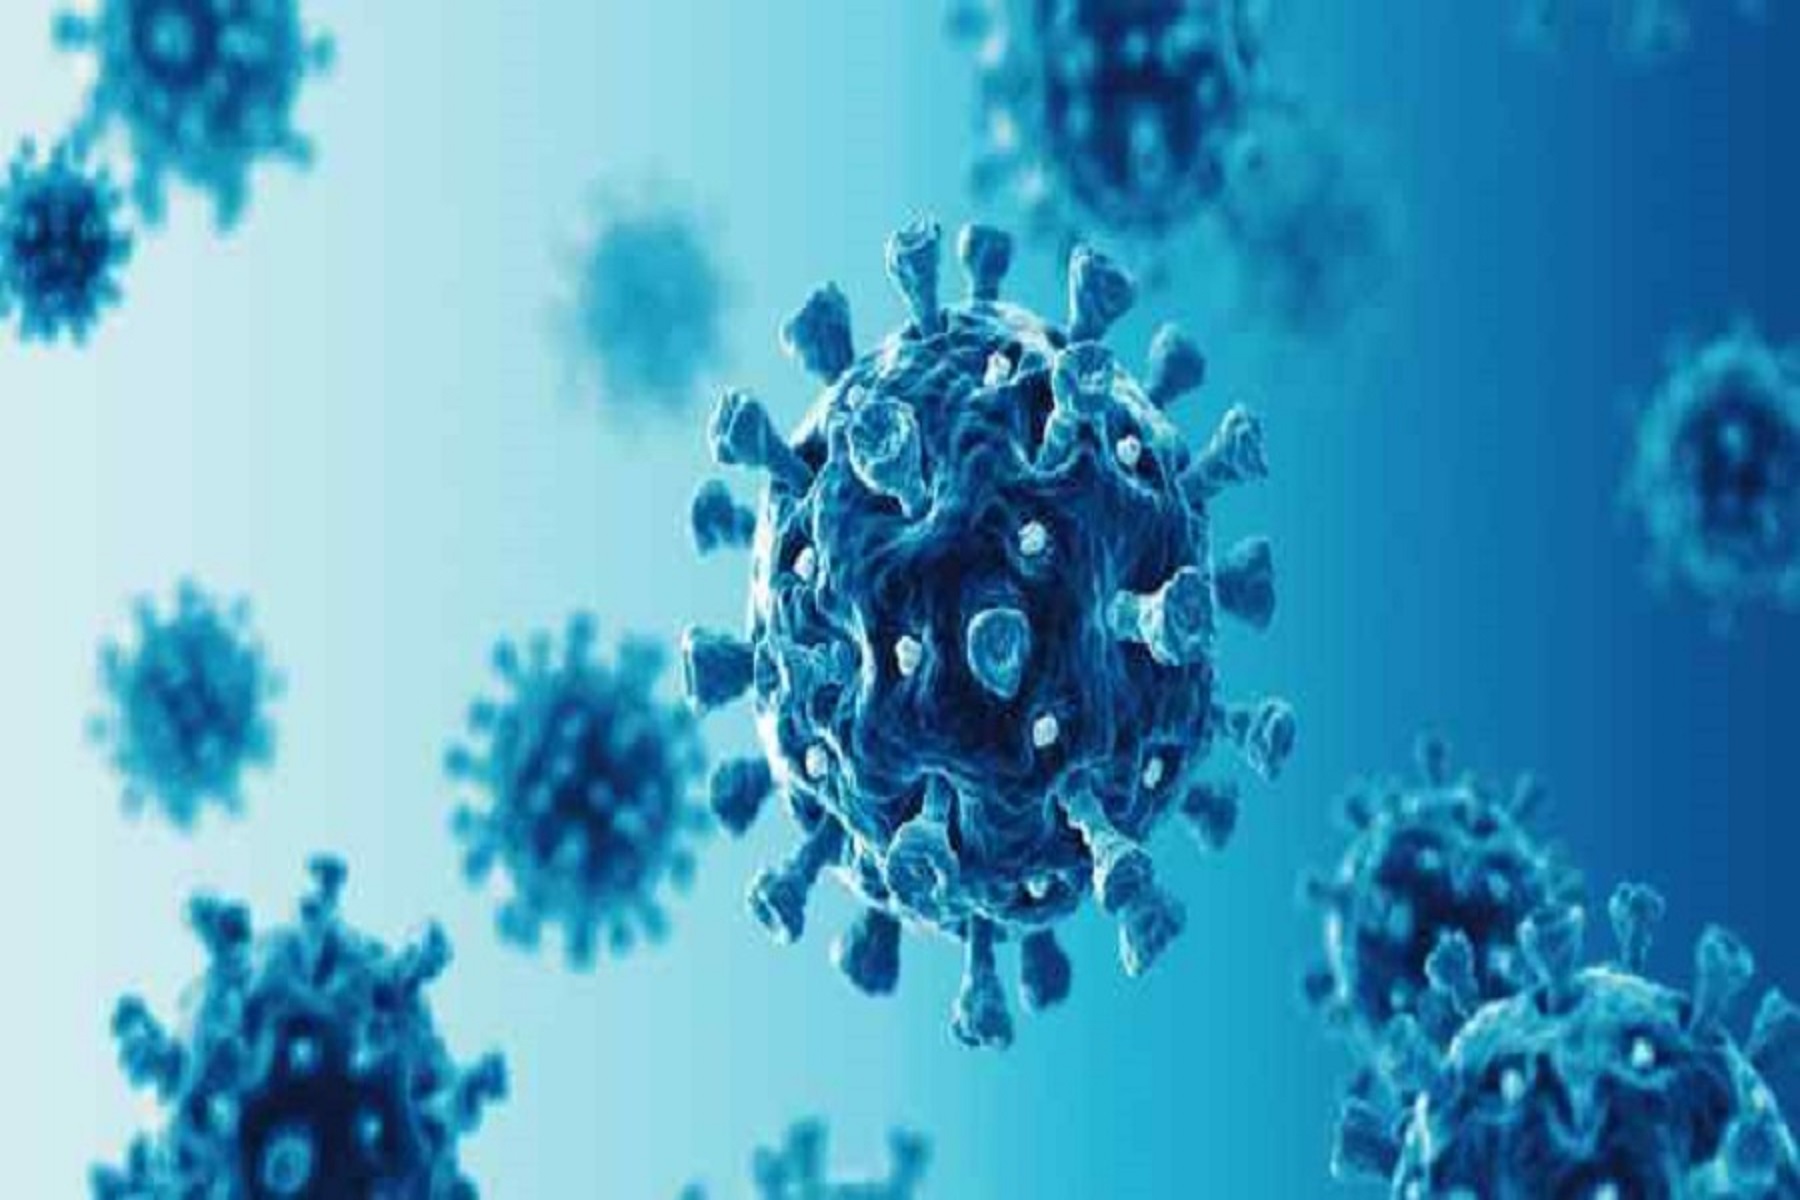 SARS-CoV-2 Lancet: Το άρθρο του ζητά «αντικειμενική, ανοιχτή και διαφανή» συζήτηση σχετικά με την προέλευση του ιού